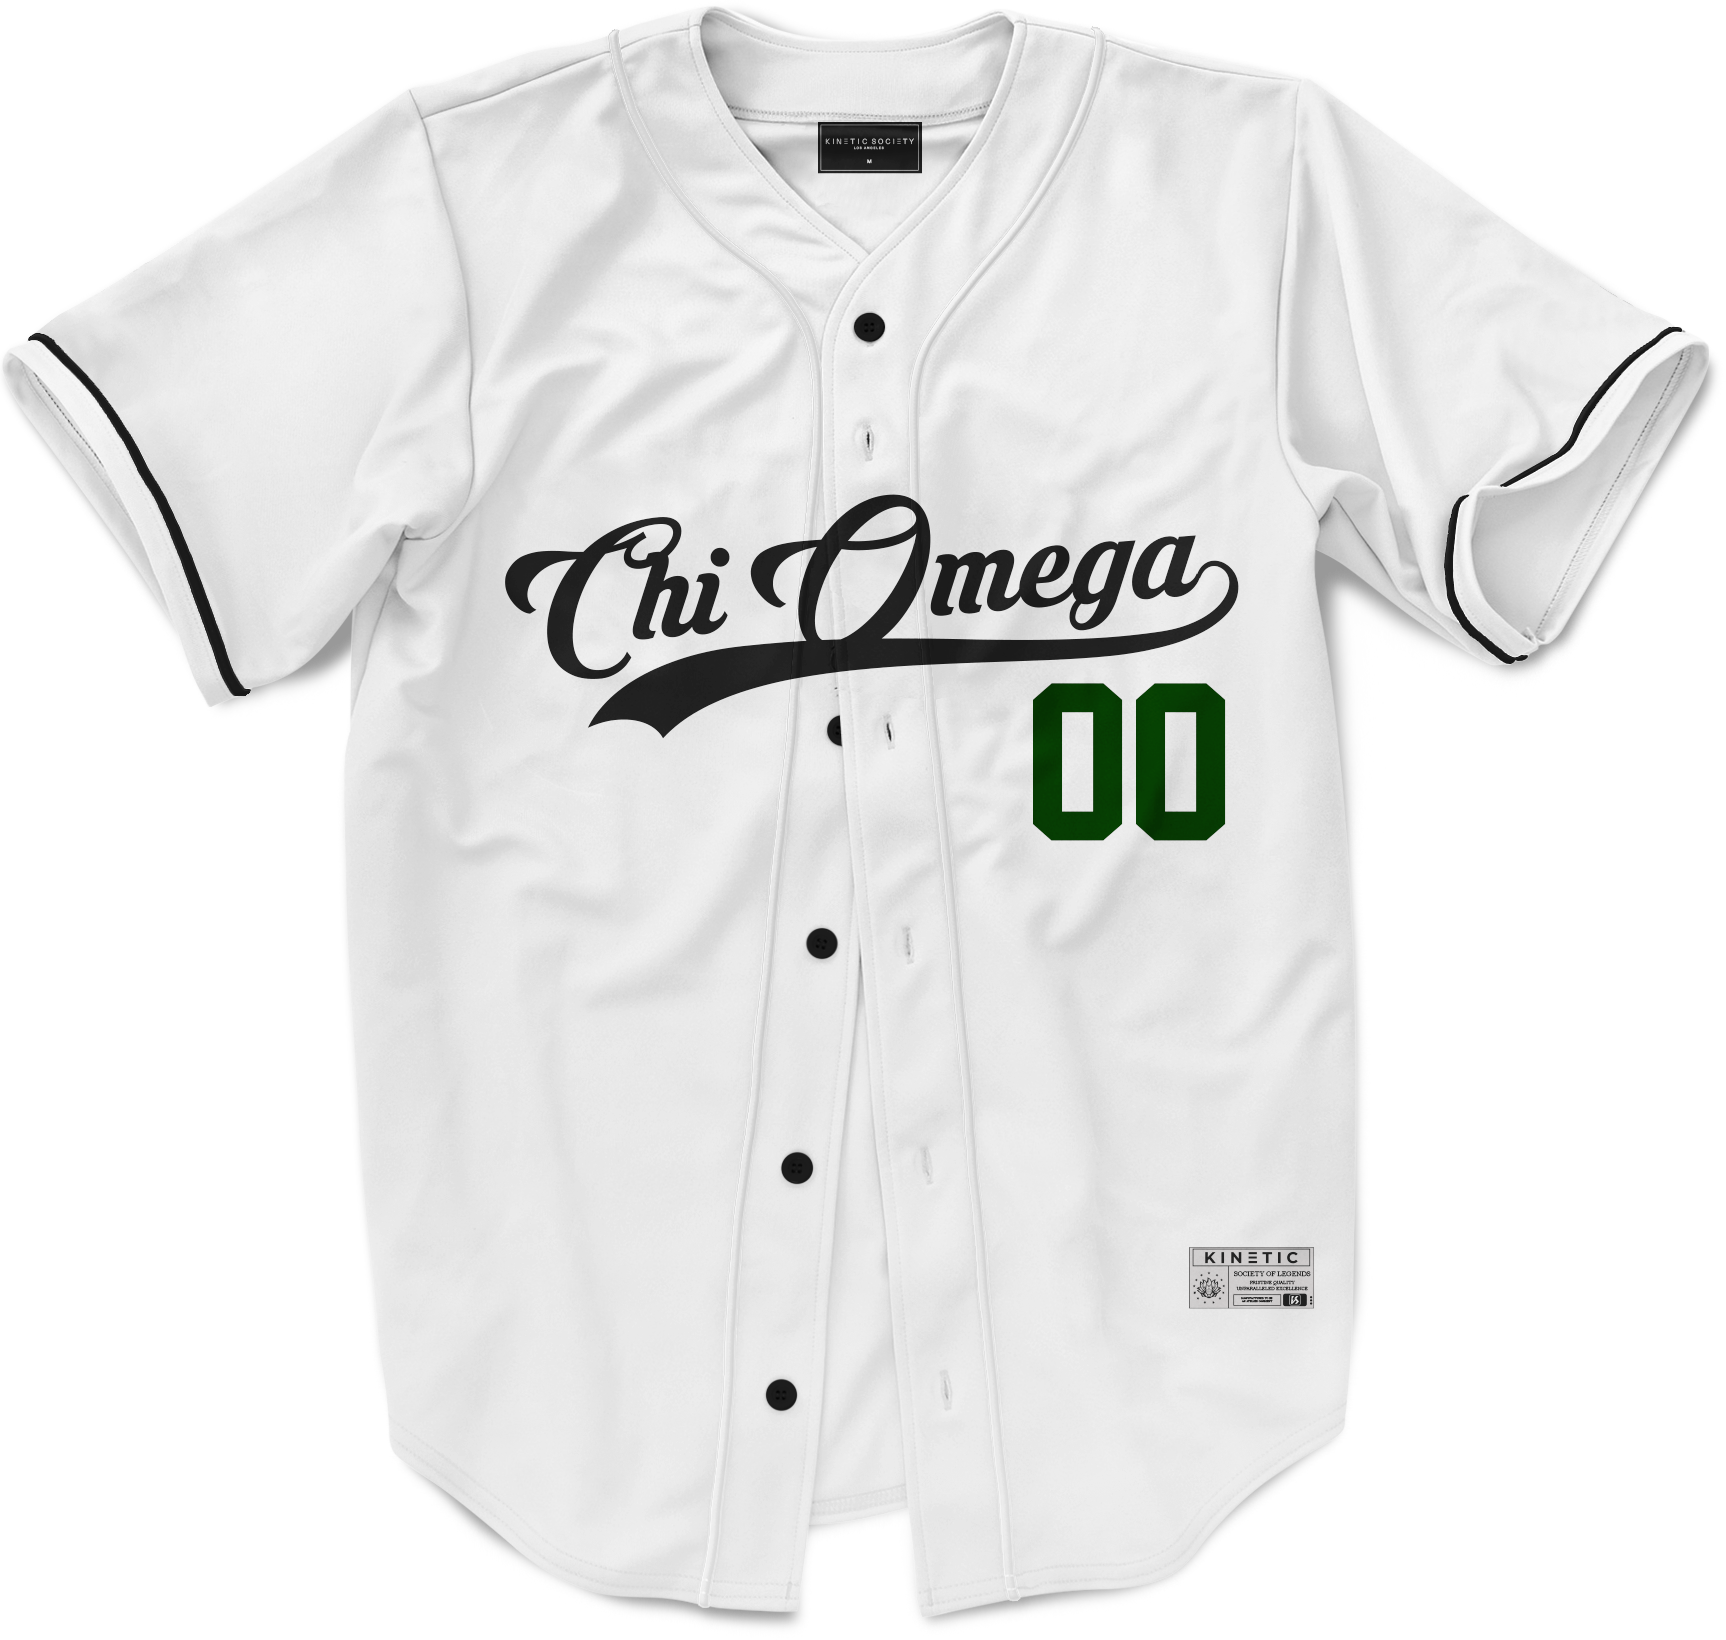 Chi Omega - Classic Ballpark Green Baseball Jersey